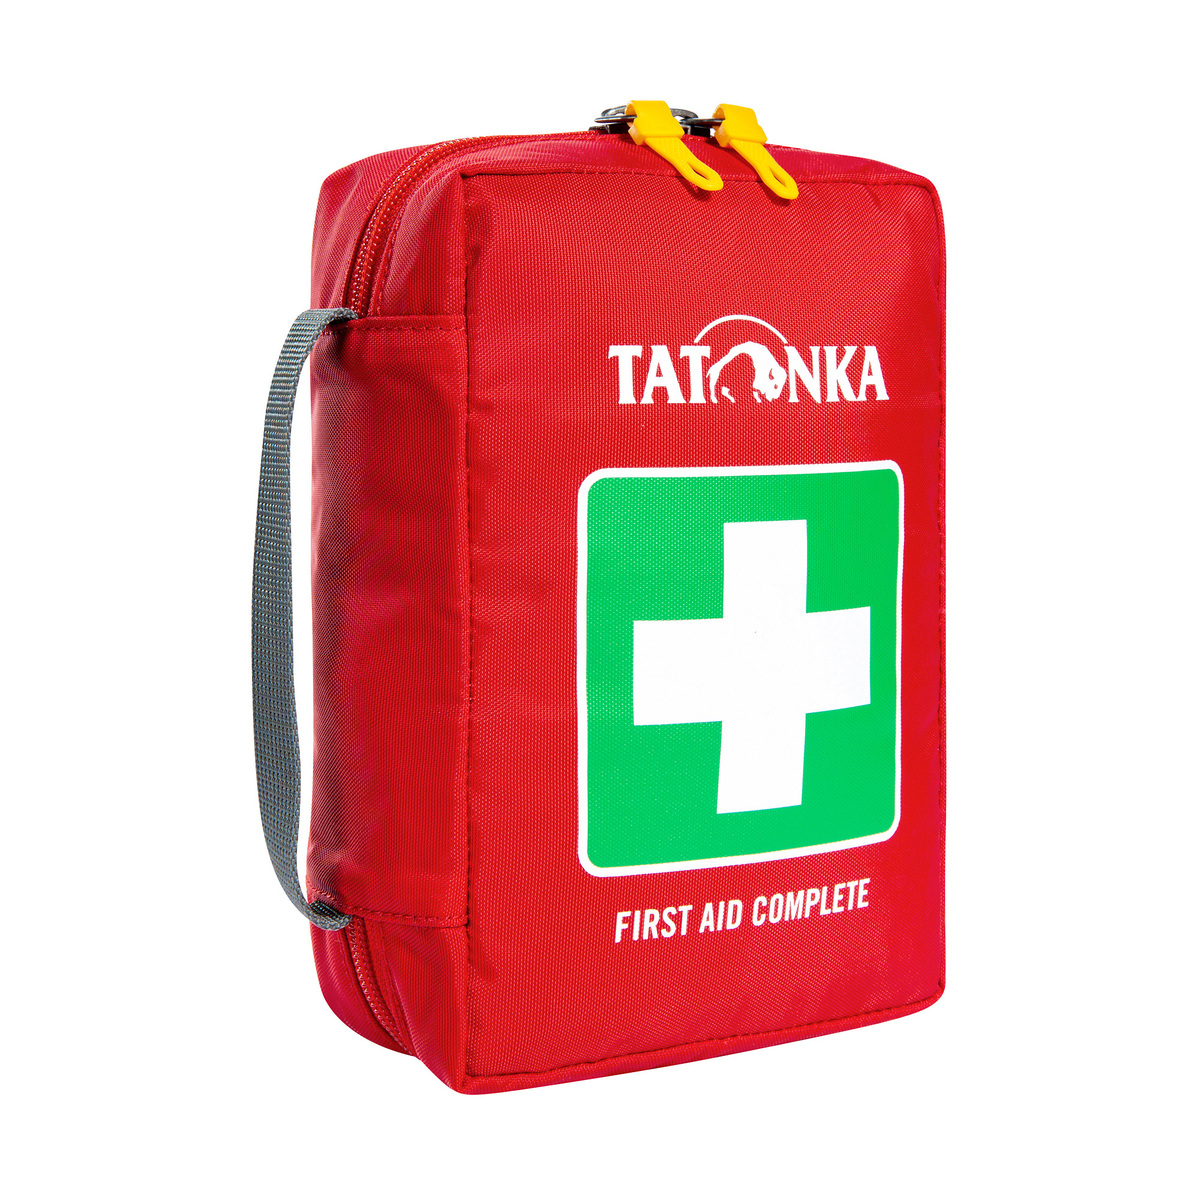  Tatonka First Aid Complete